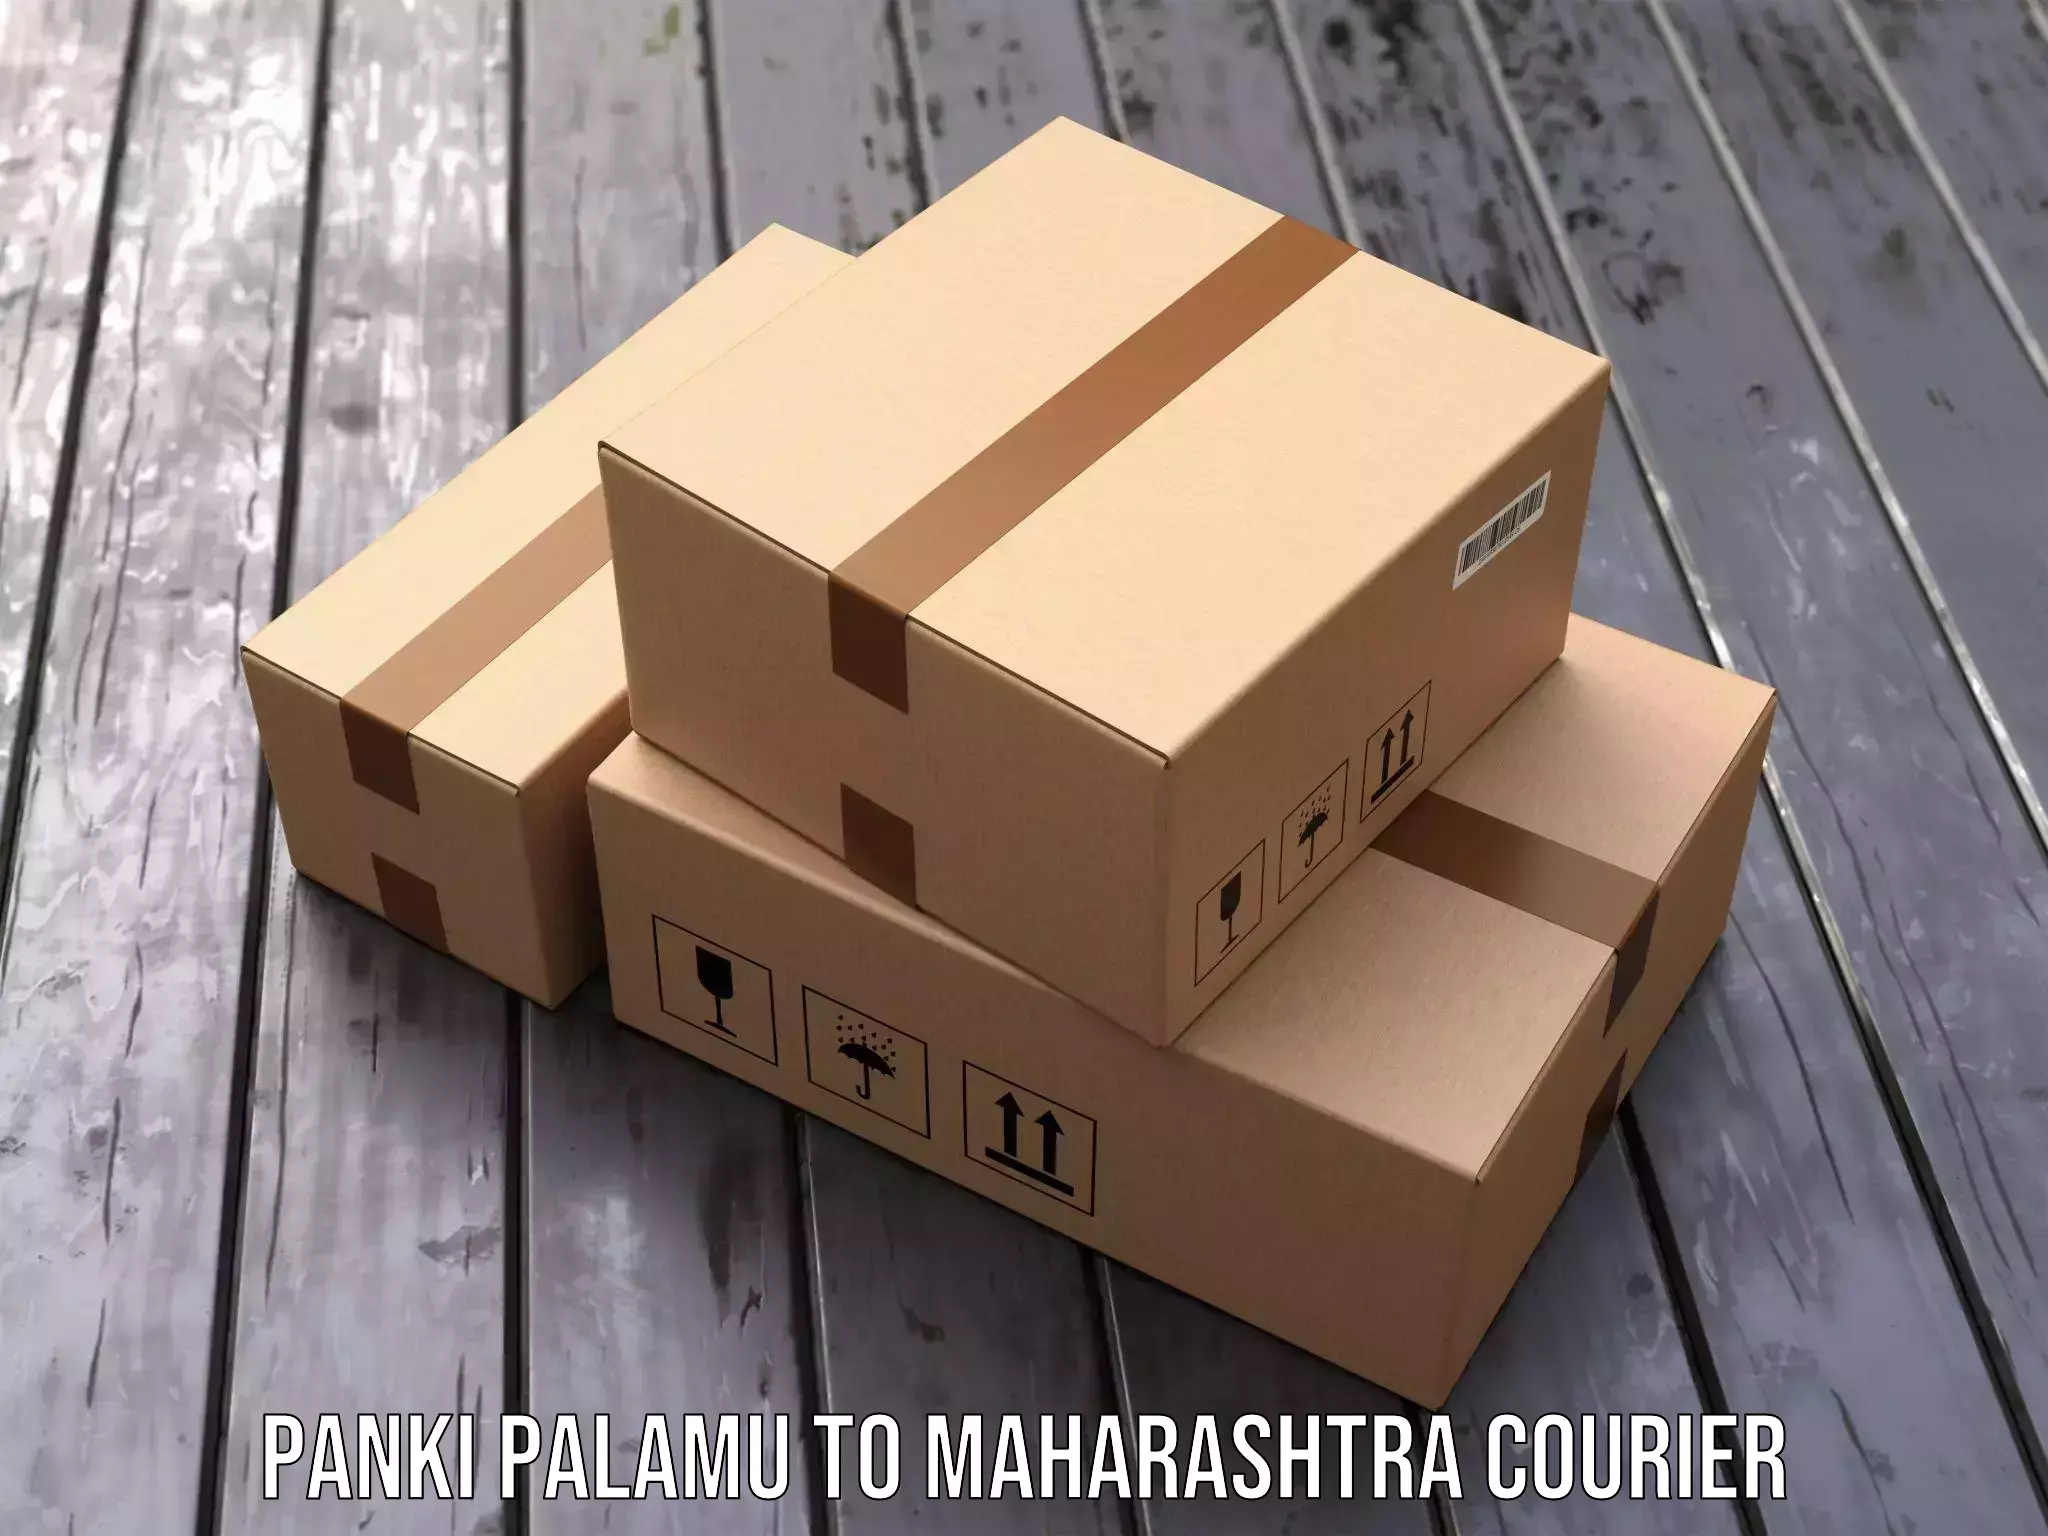 Express delivery capabilities Panki Palamu to IIIT Nagpur